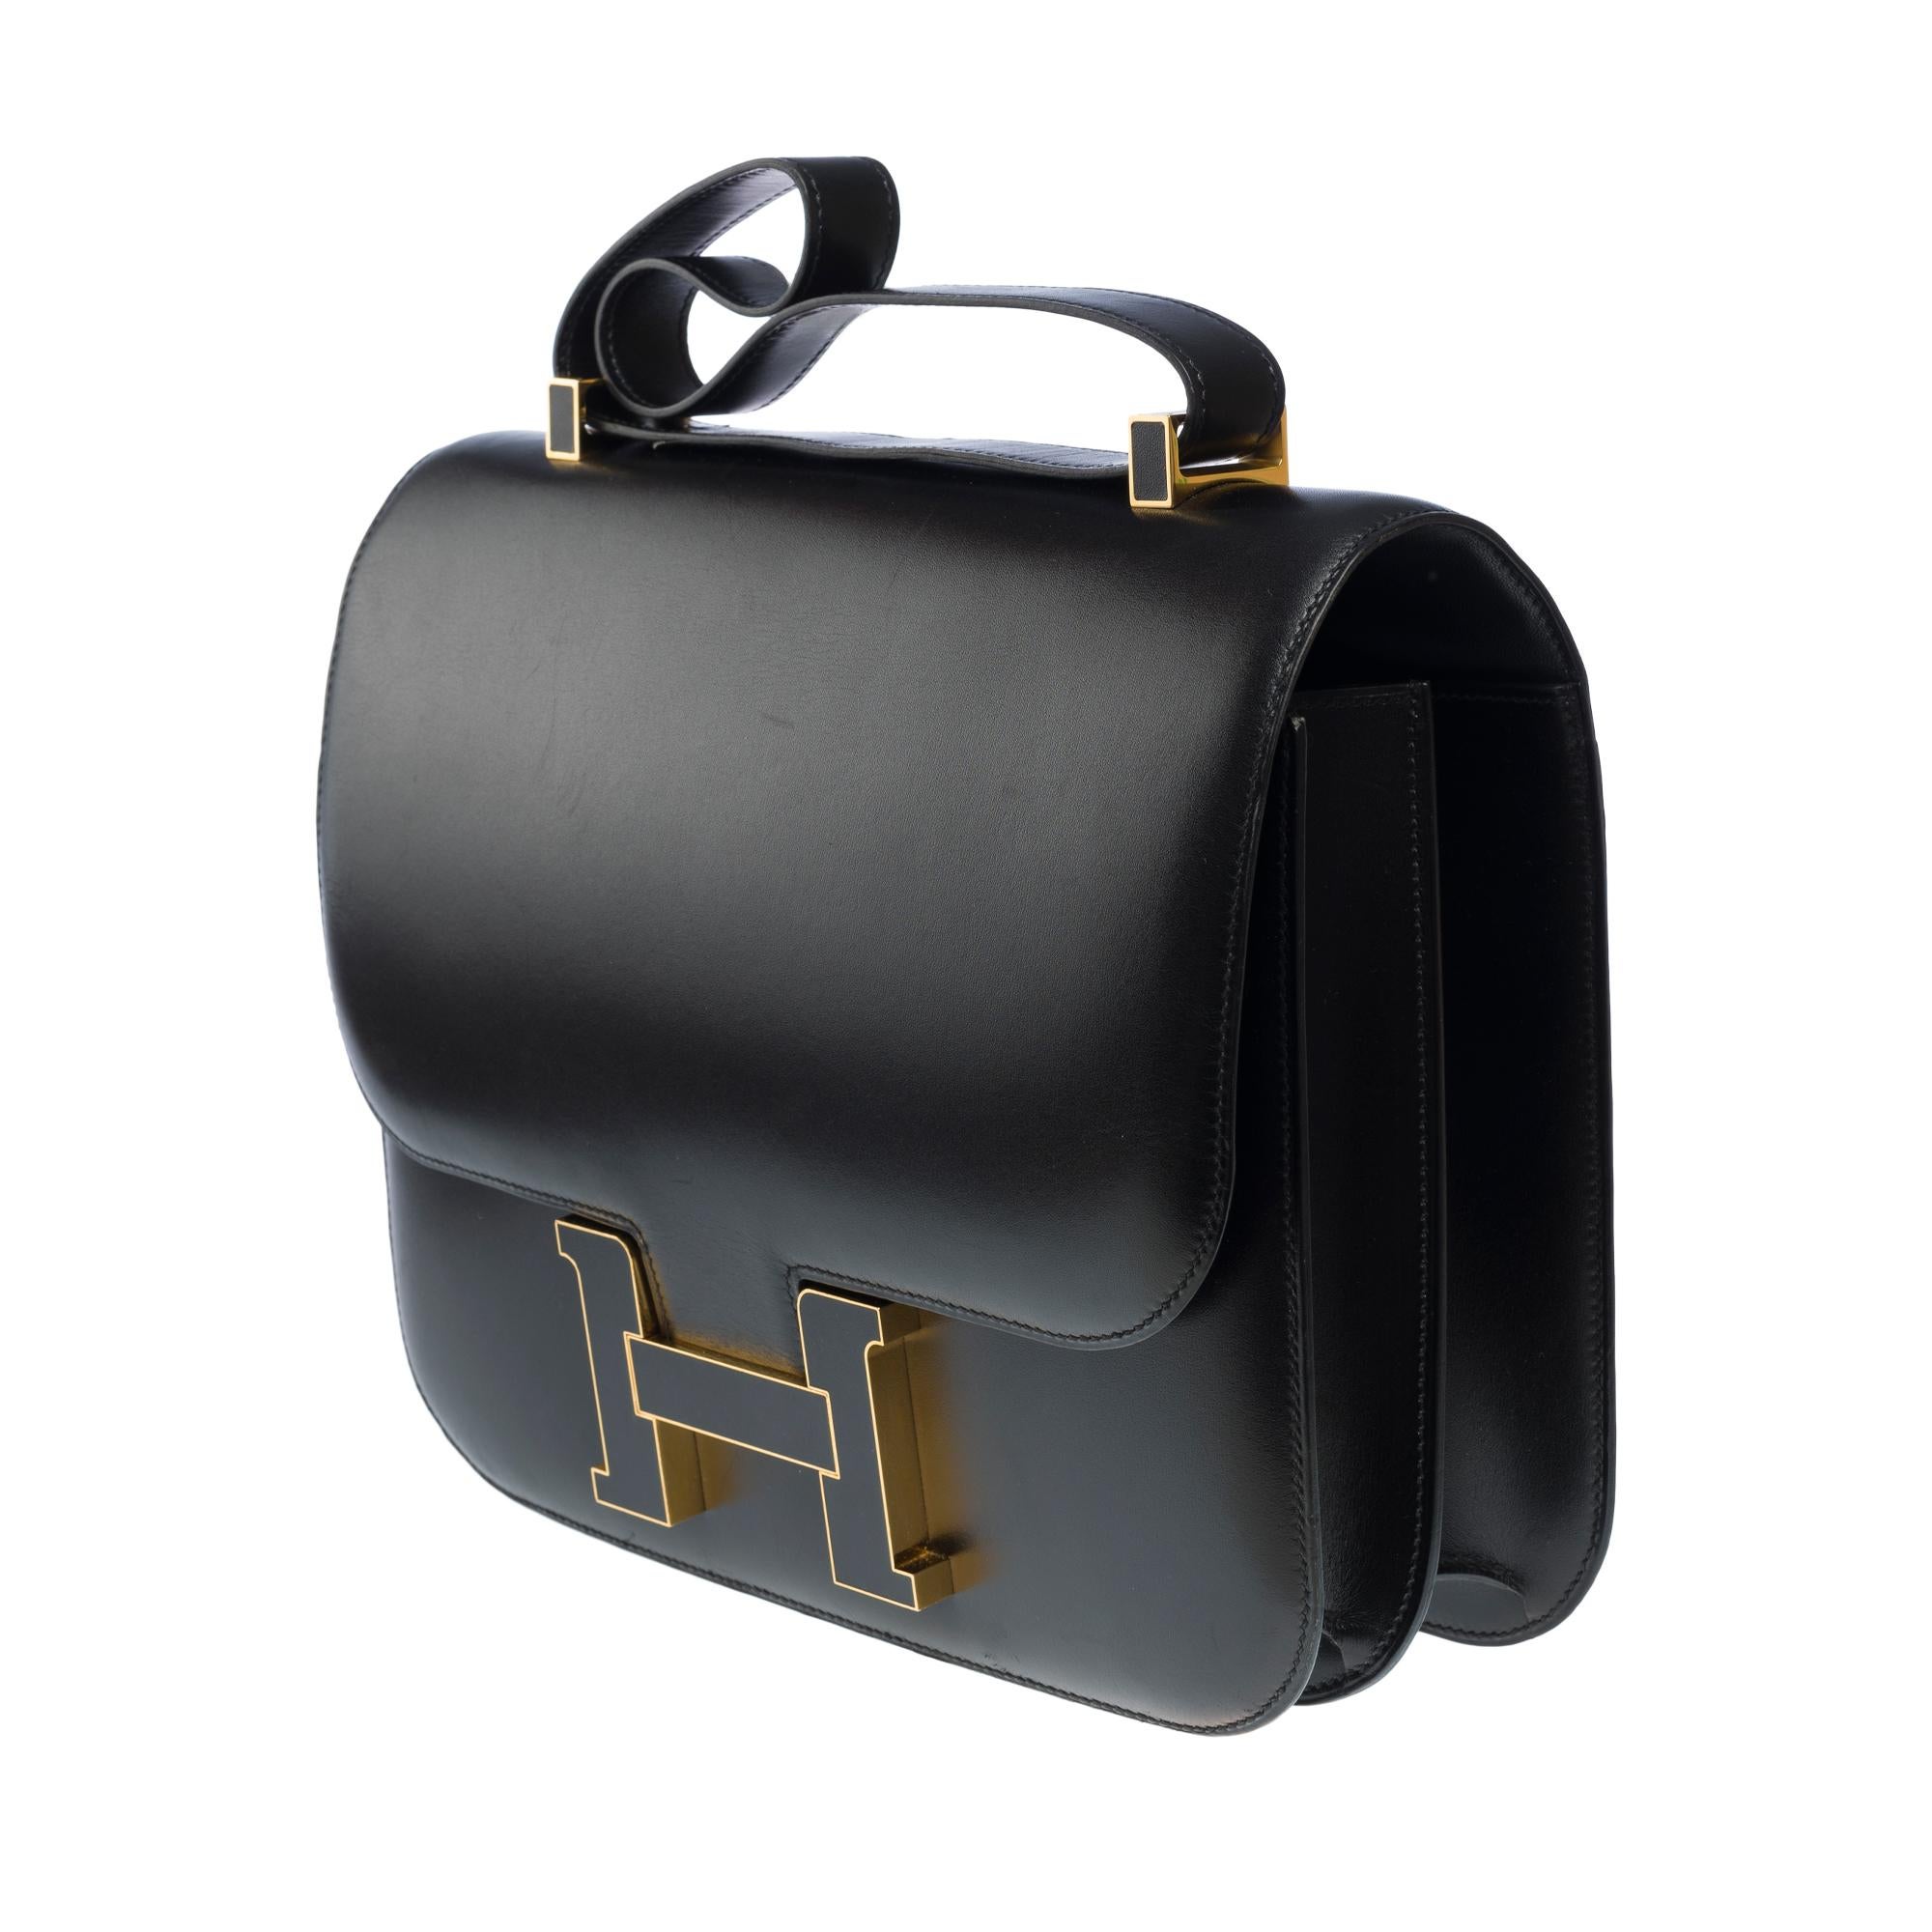  Rare Hermès Constance Cartable shoulder bag in Black Box Calf leather , GHW For Sale 1